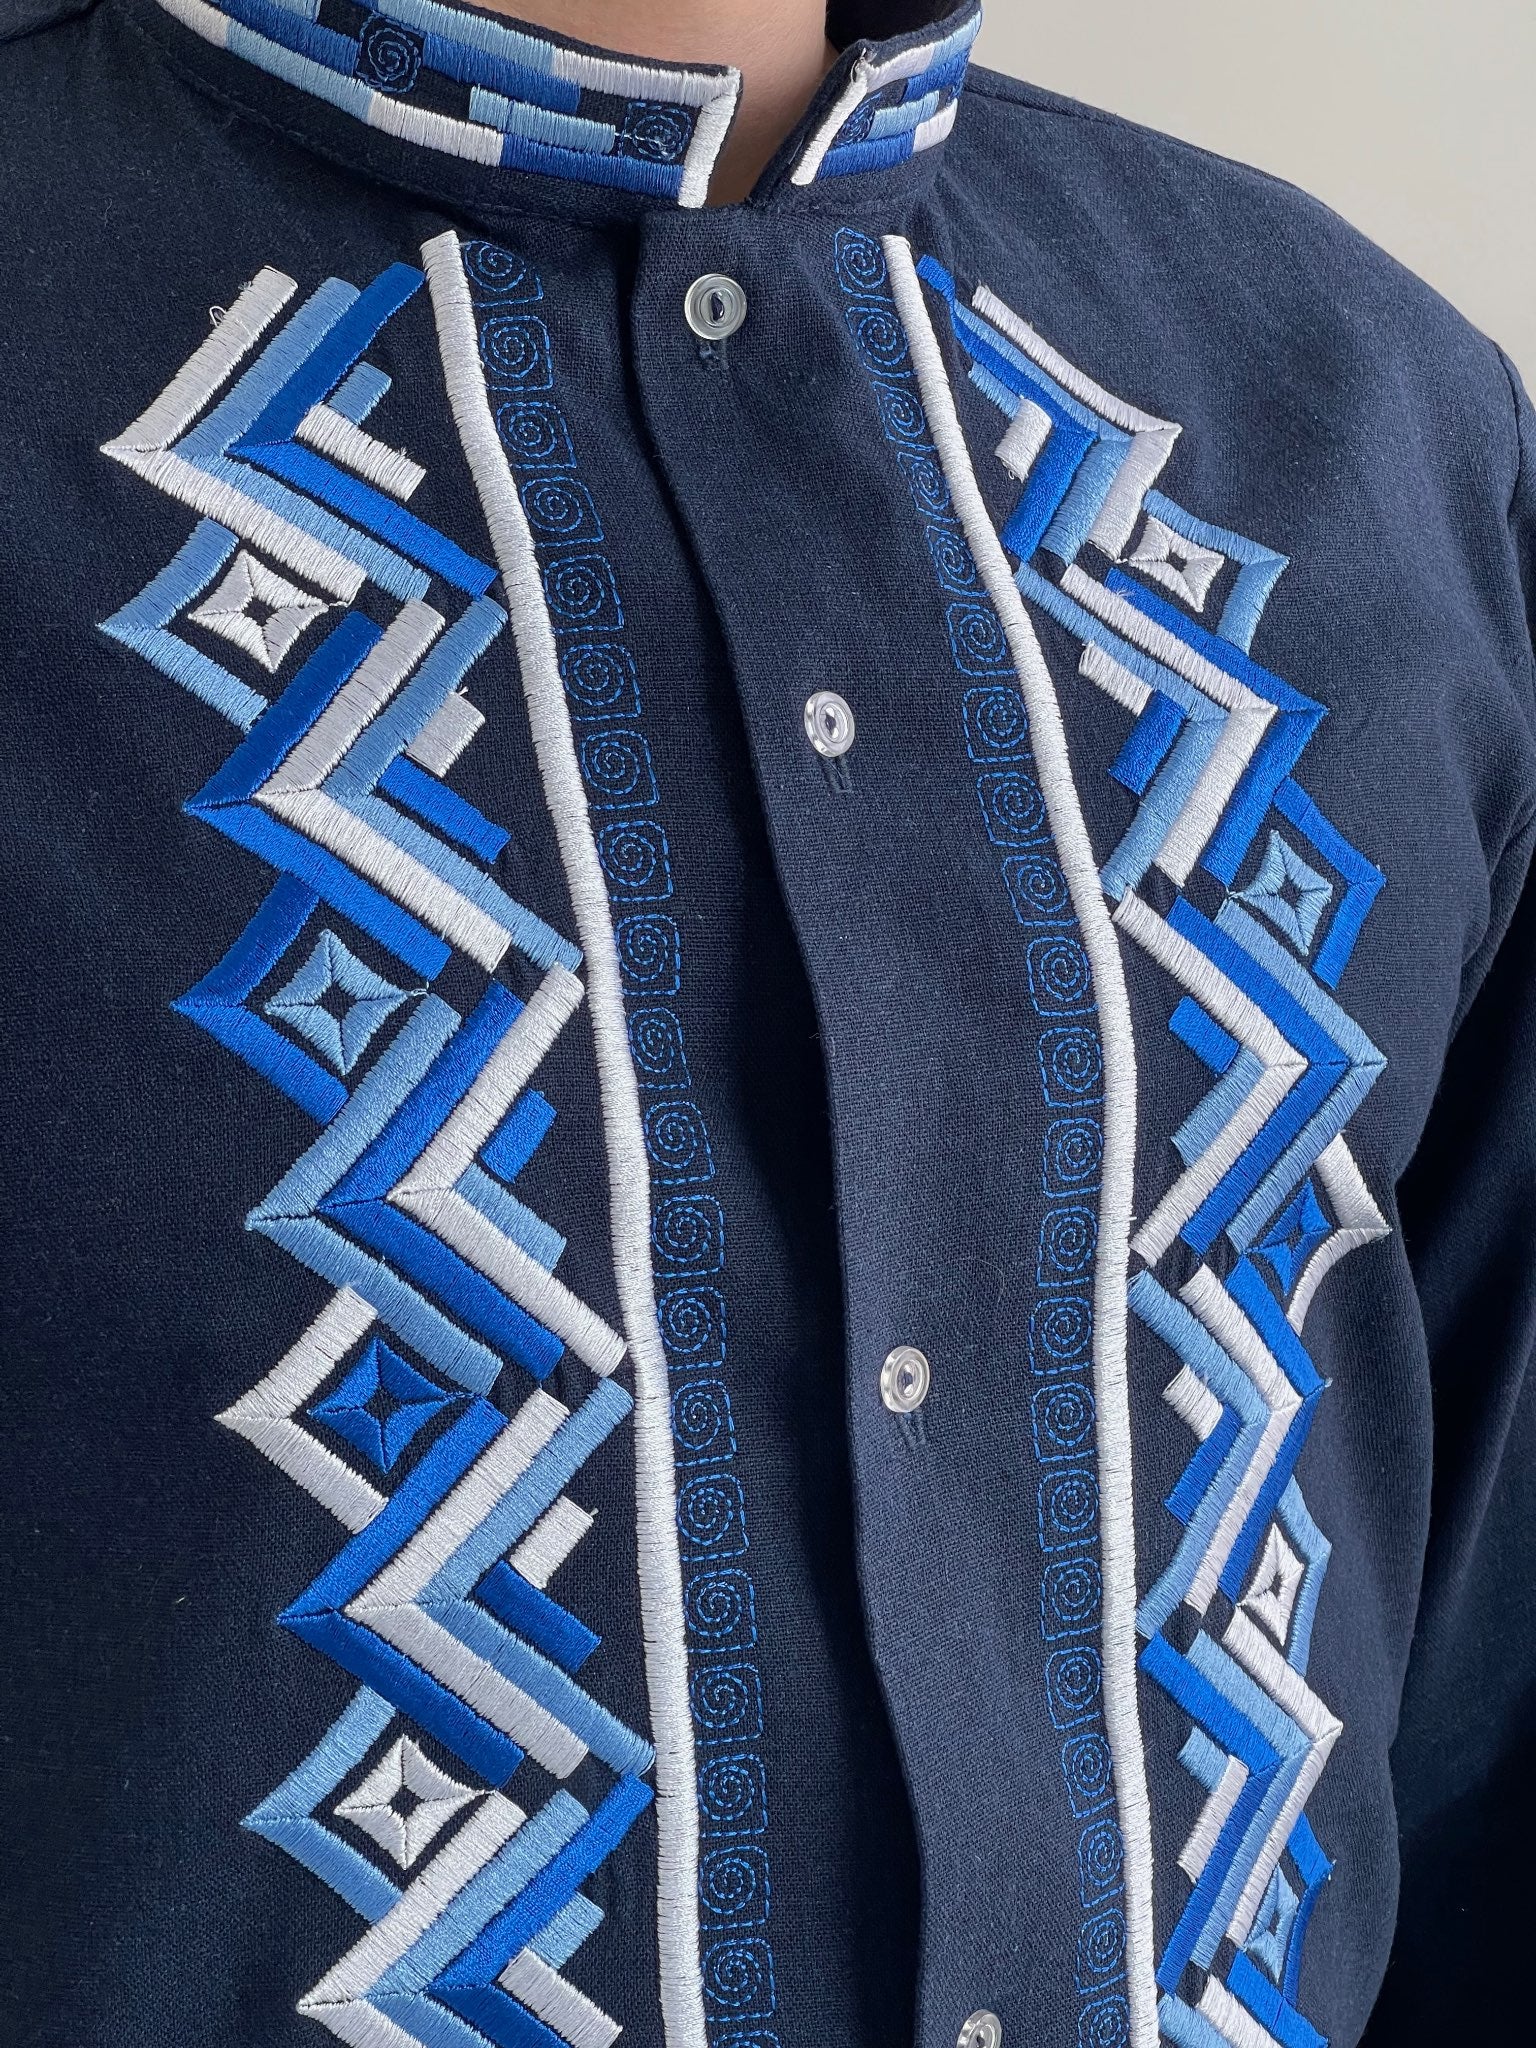 Blue Men's Vyshyvanka Shirt with White, Light Blue, and Dark Blue Embroidery (Чоловіча Вишиванка)